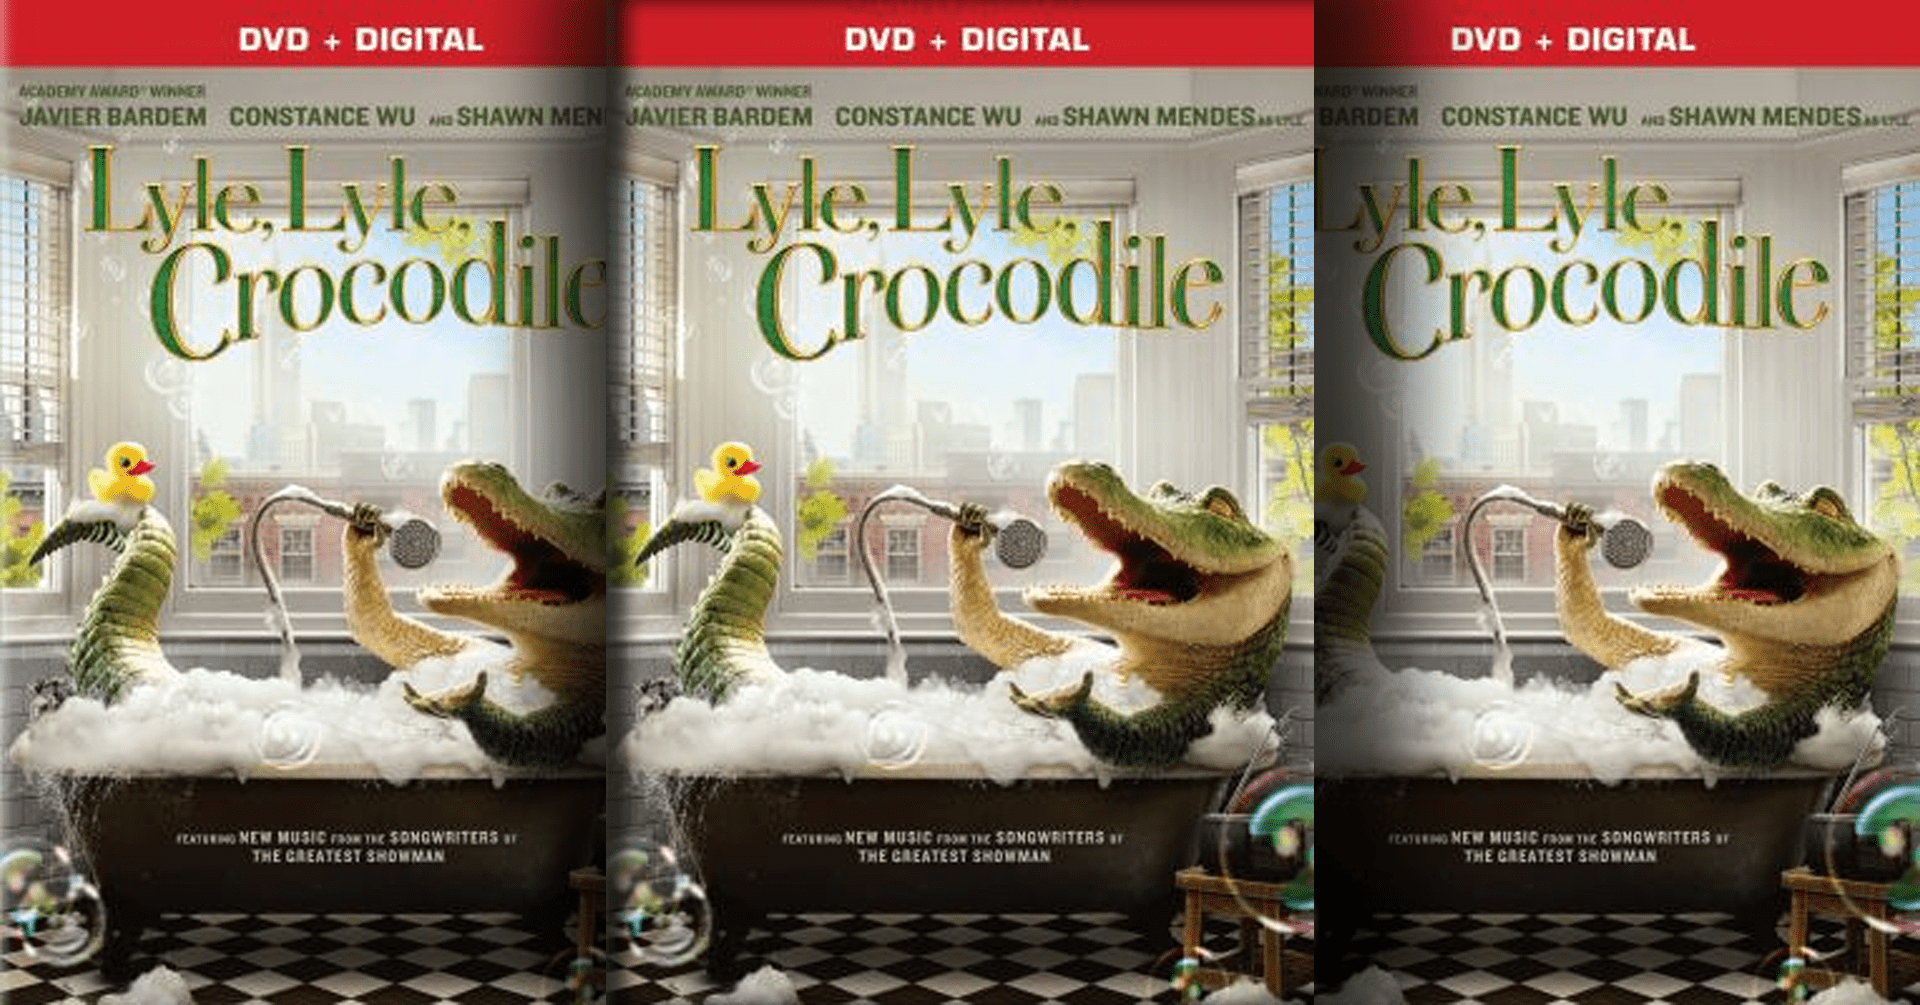 Lyle, Lyle, Crocodile movie cover